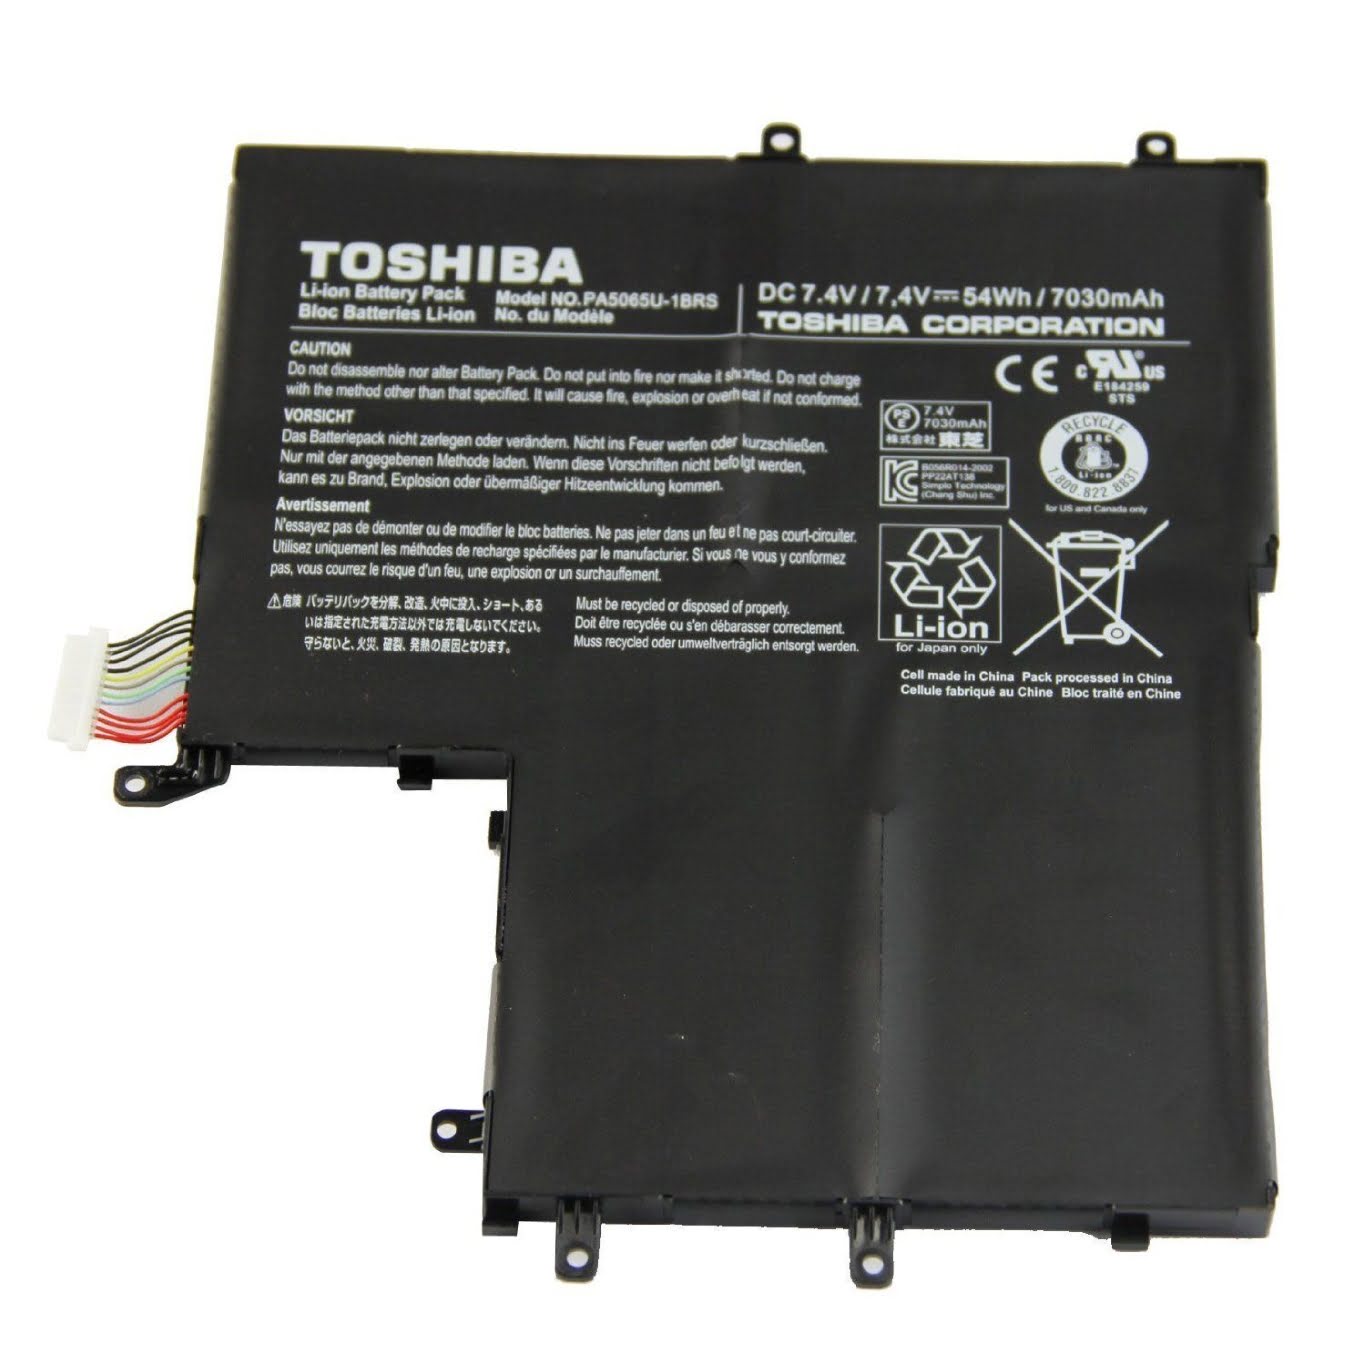 P000561920, PA5065U-1BRS ersatz Laptop Akku fuer Toshiba Satellite U845W Series, U840W-S400 Series, 7,4V, 7030mah / 54wh